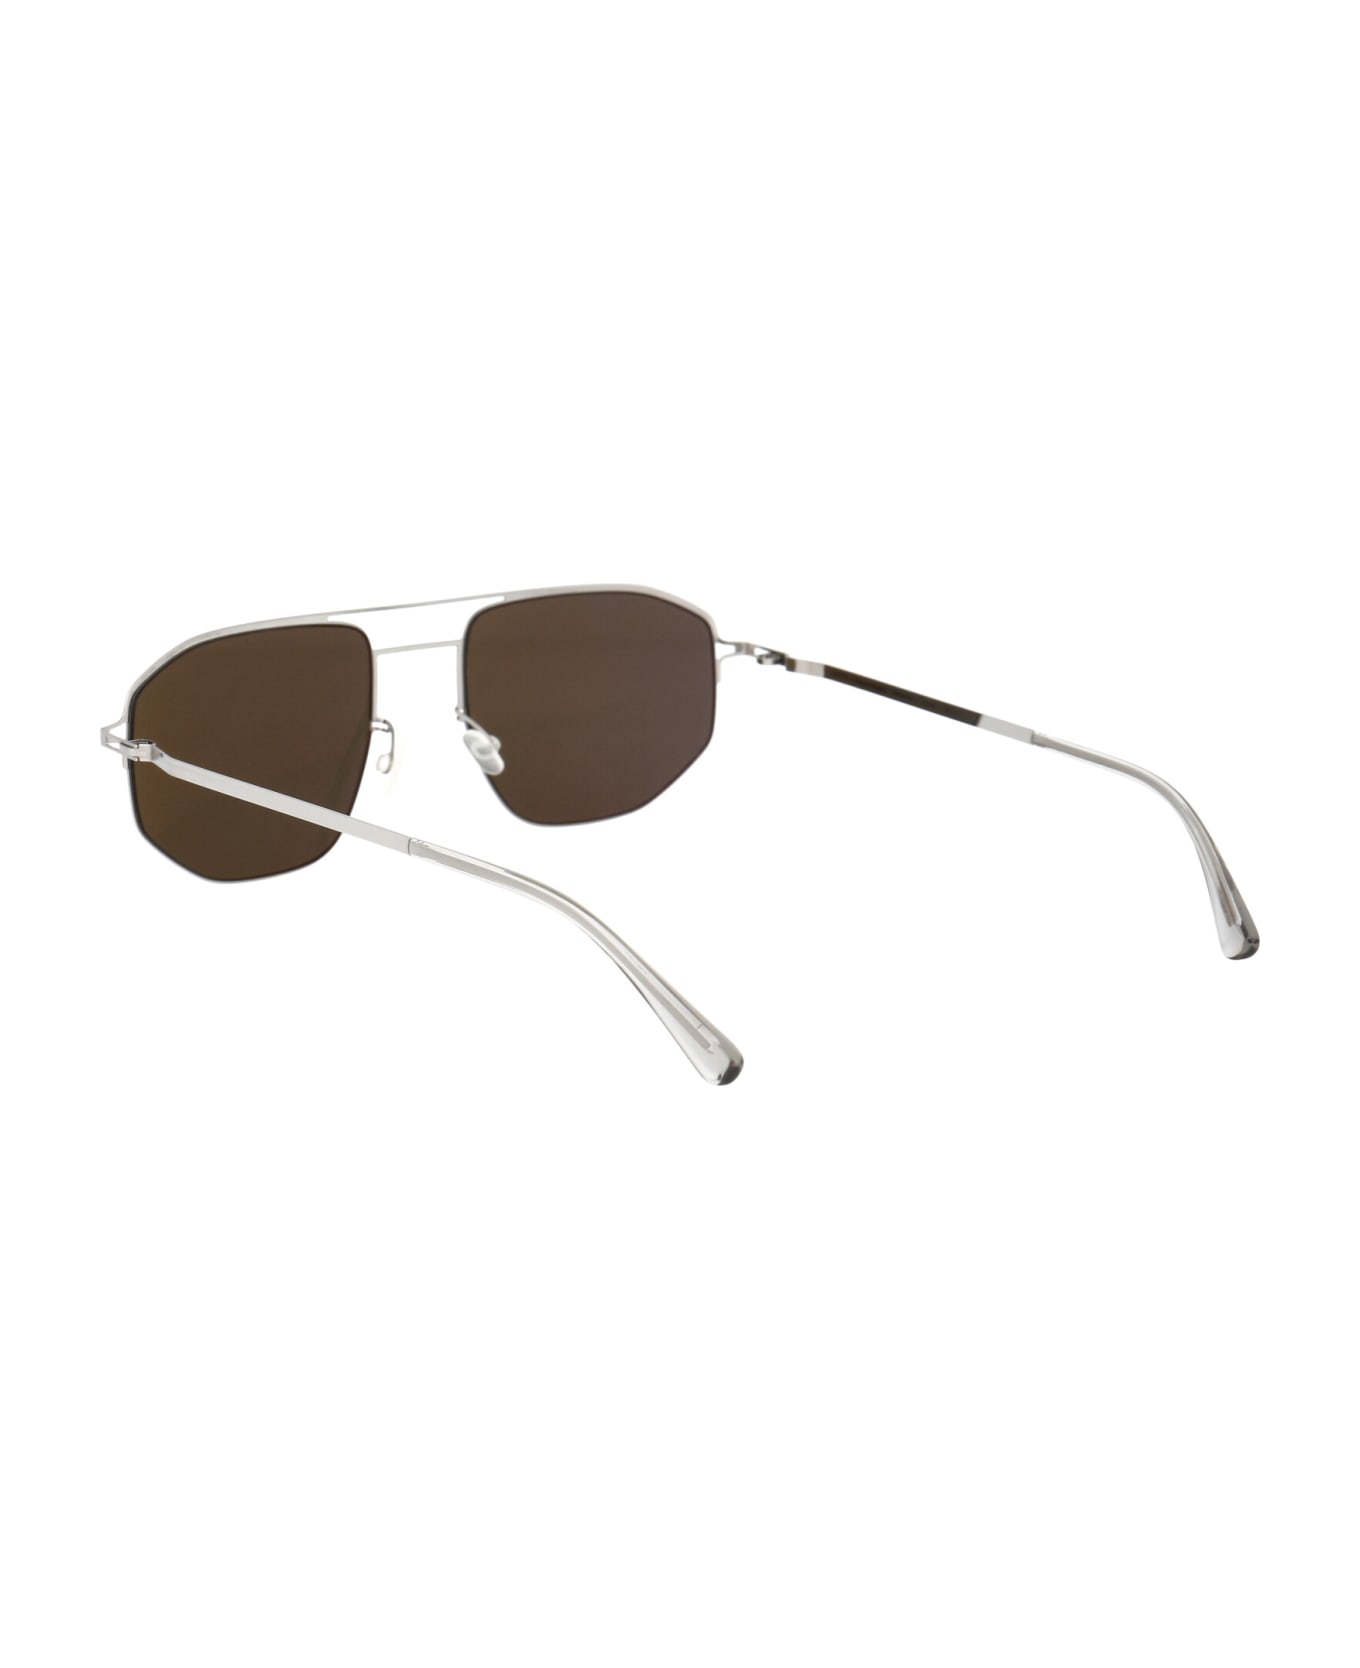 Mykita Mmcraft017 Sunglasses - 051 Shinysilver Rawgreen Solid サングラス